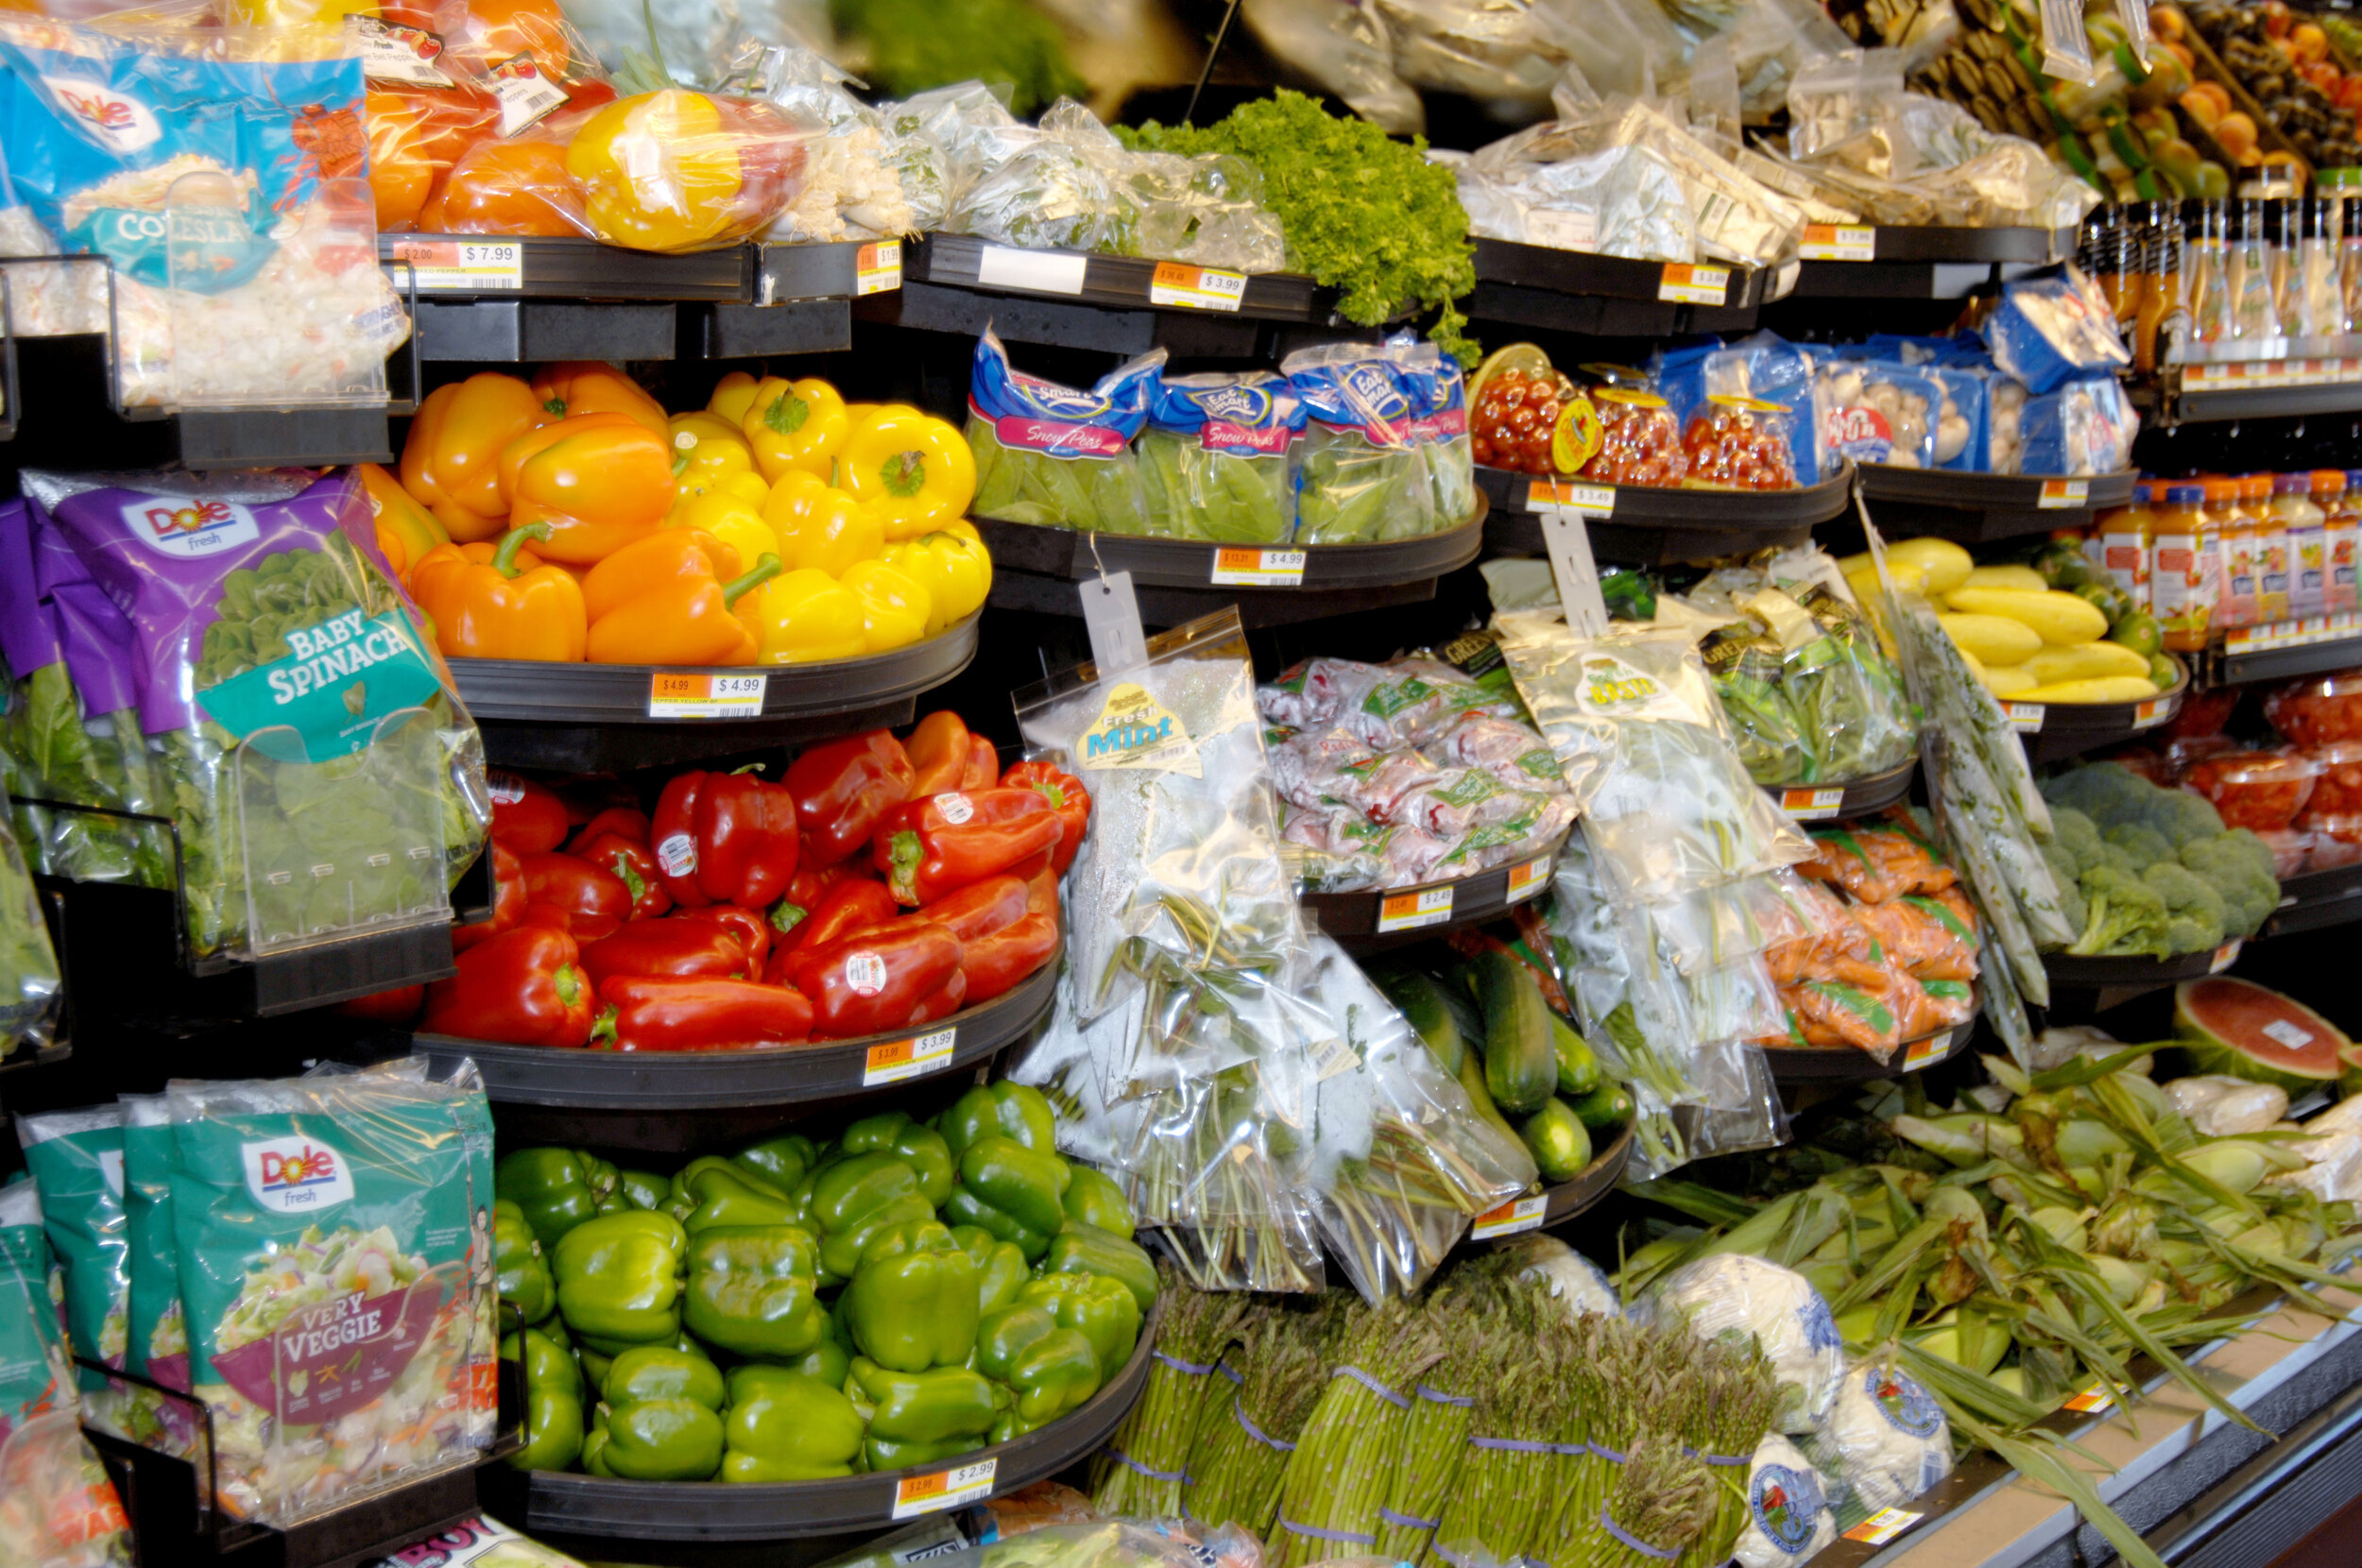  Bud's Fresh Market's vegetable display